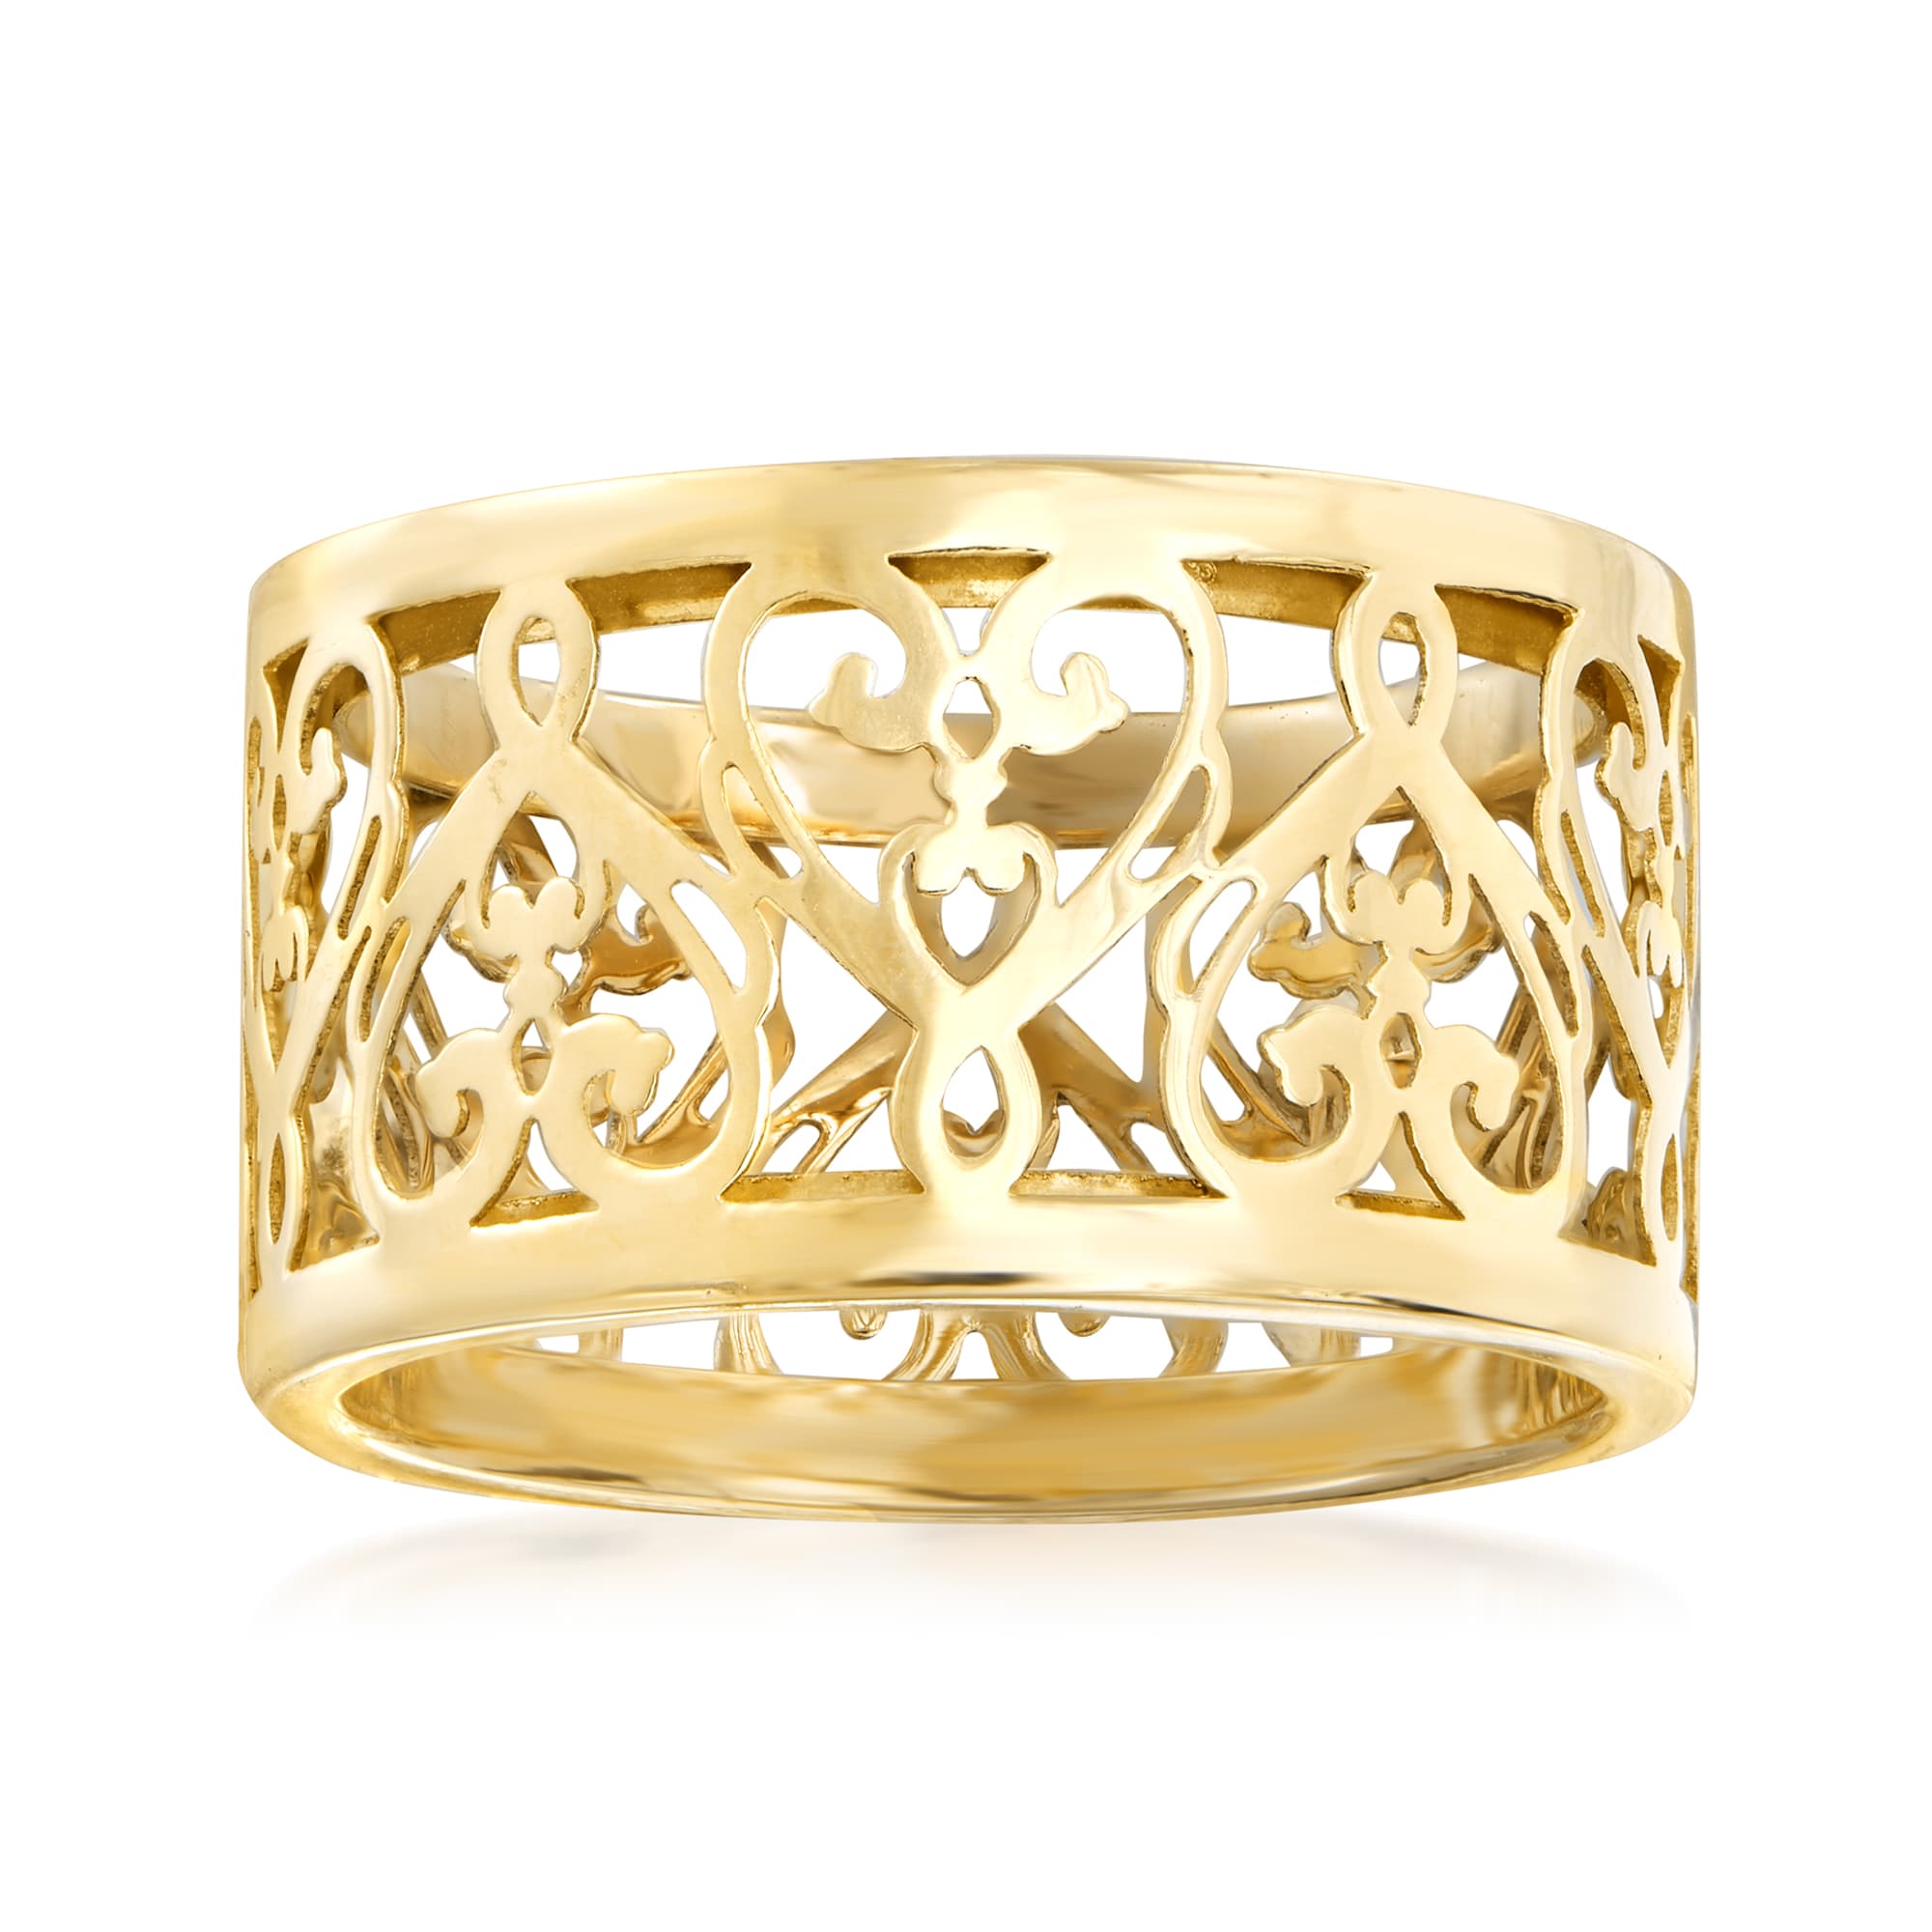 Ross-Simons - Italian Pink Enamel Heart Ring in 14kt Yellow Gold. Size 7